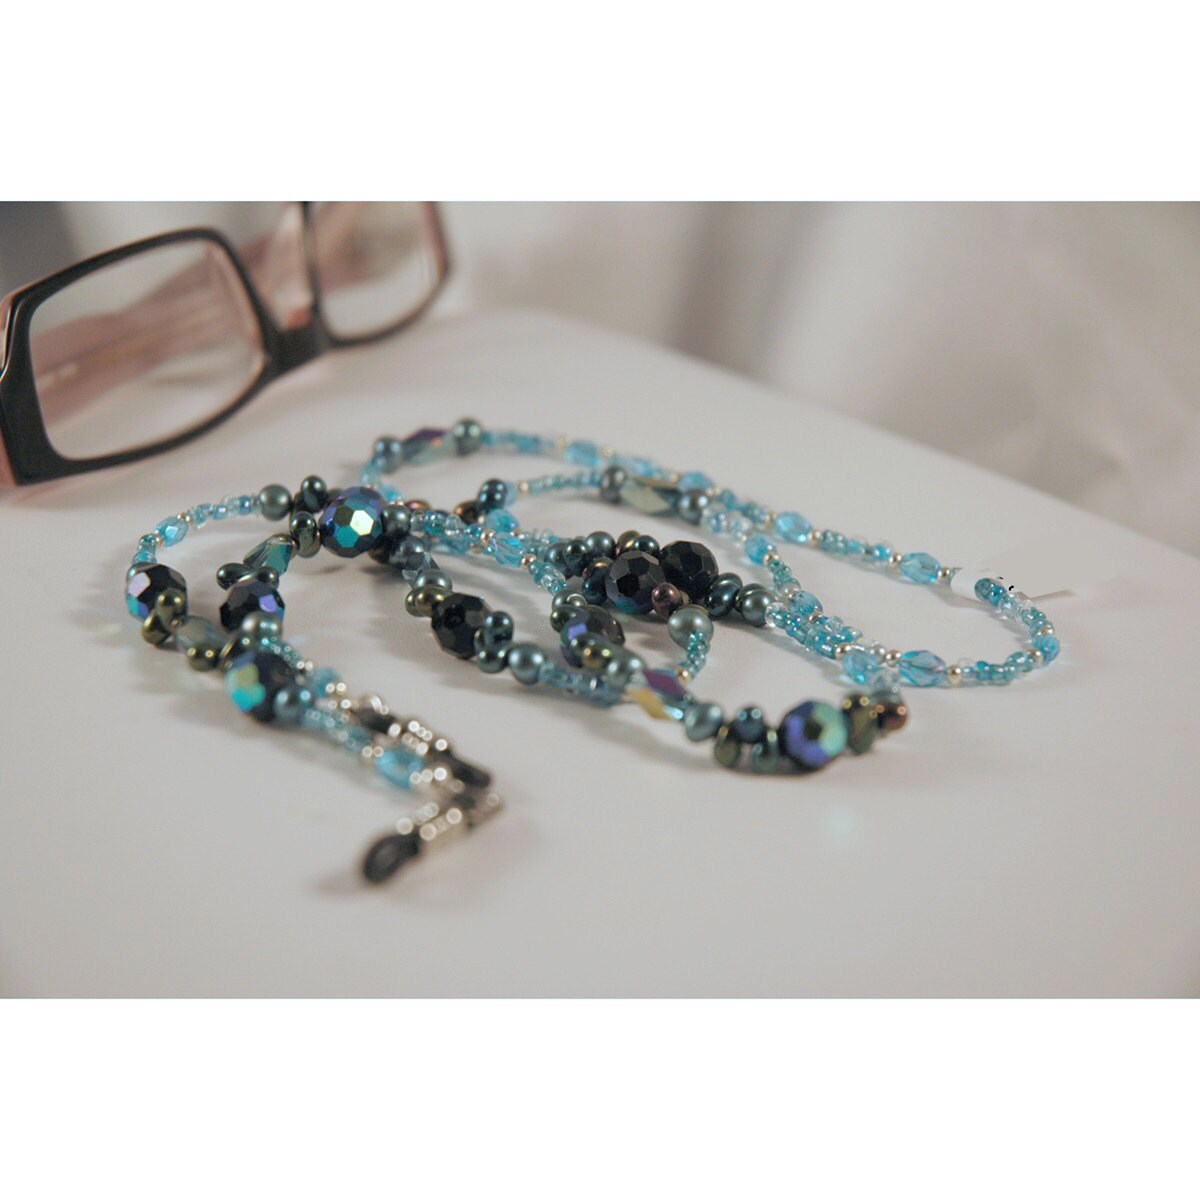 Brillenkette Eyeglass Holder - blue/blue – Driftless Goods